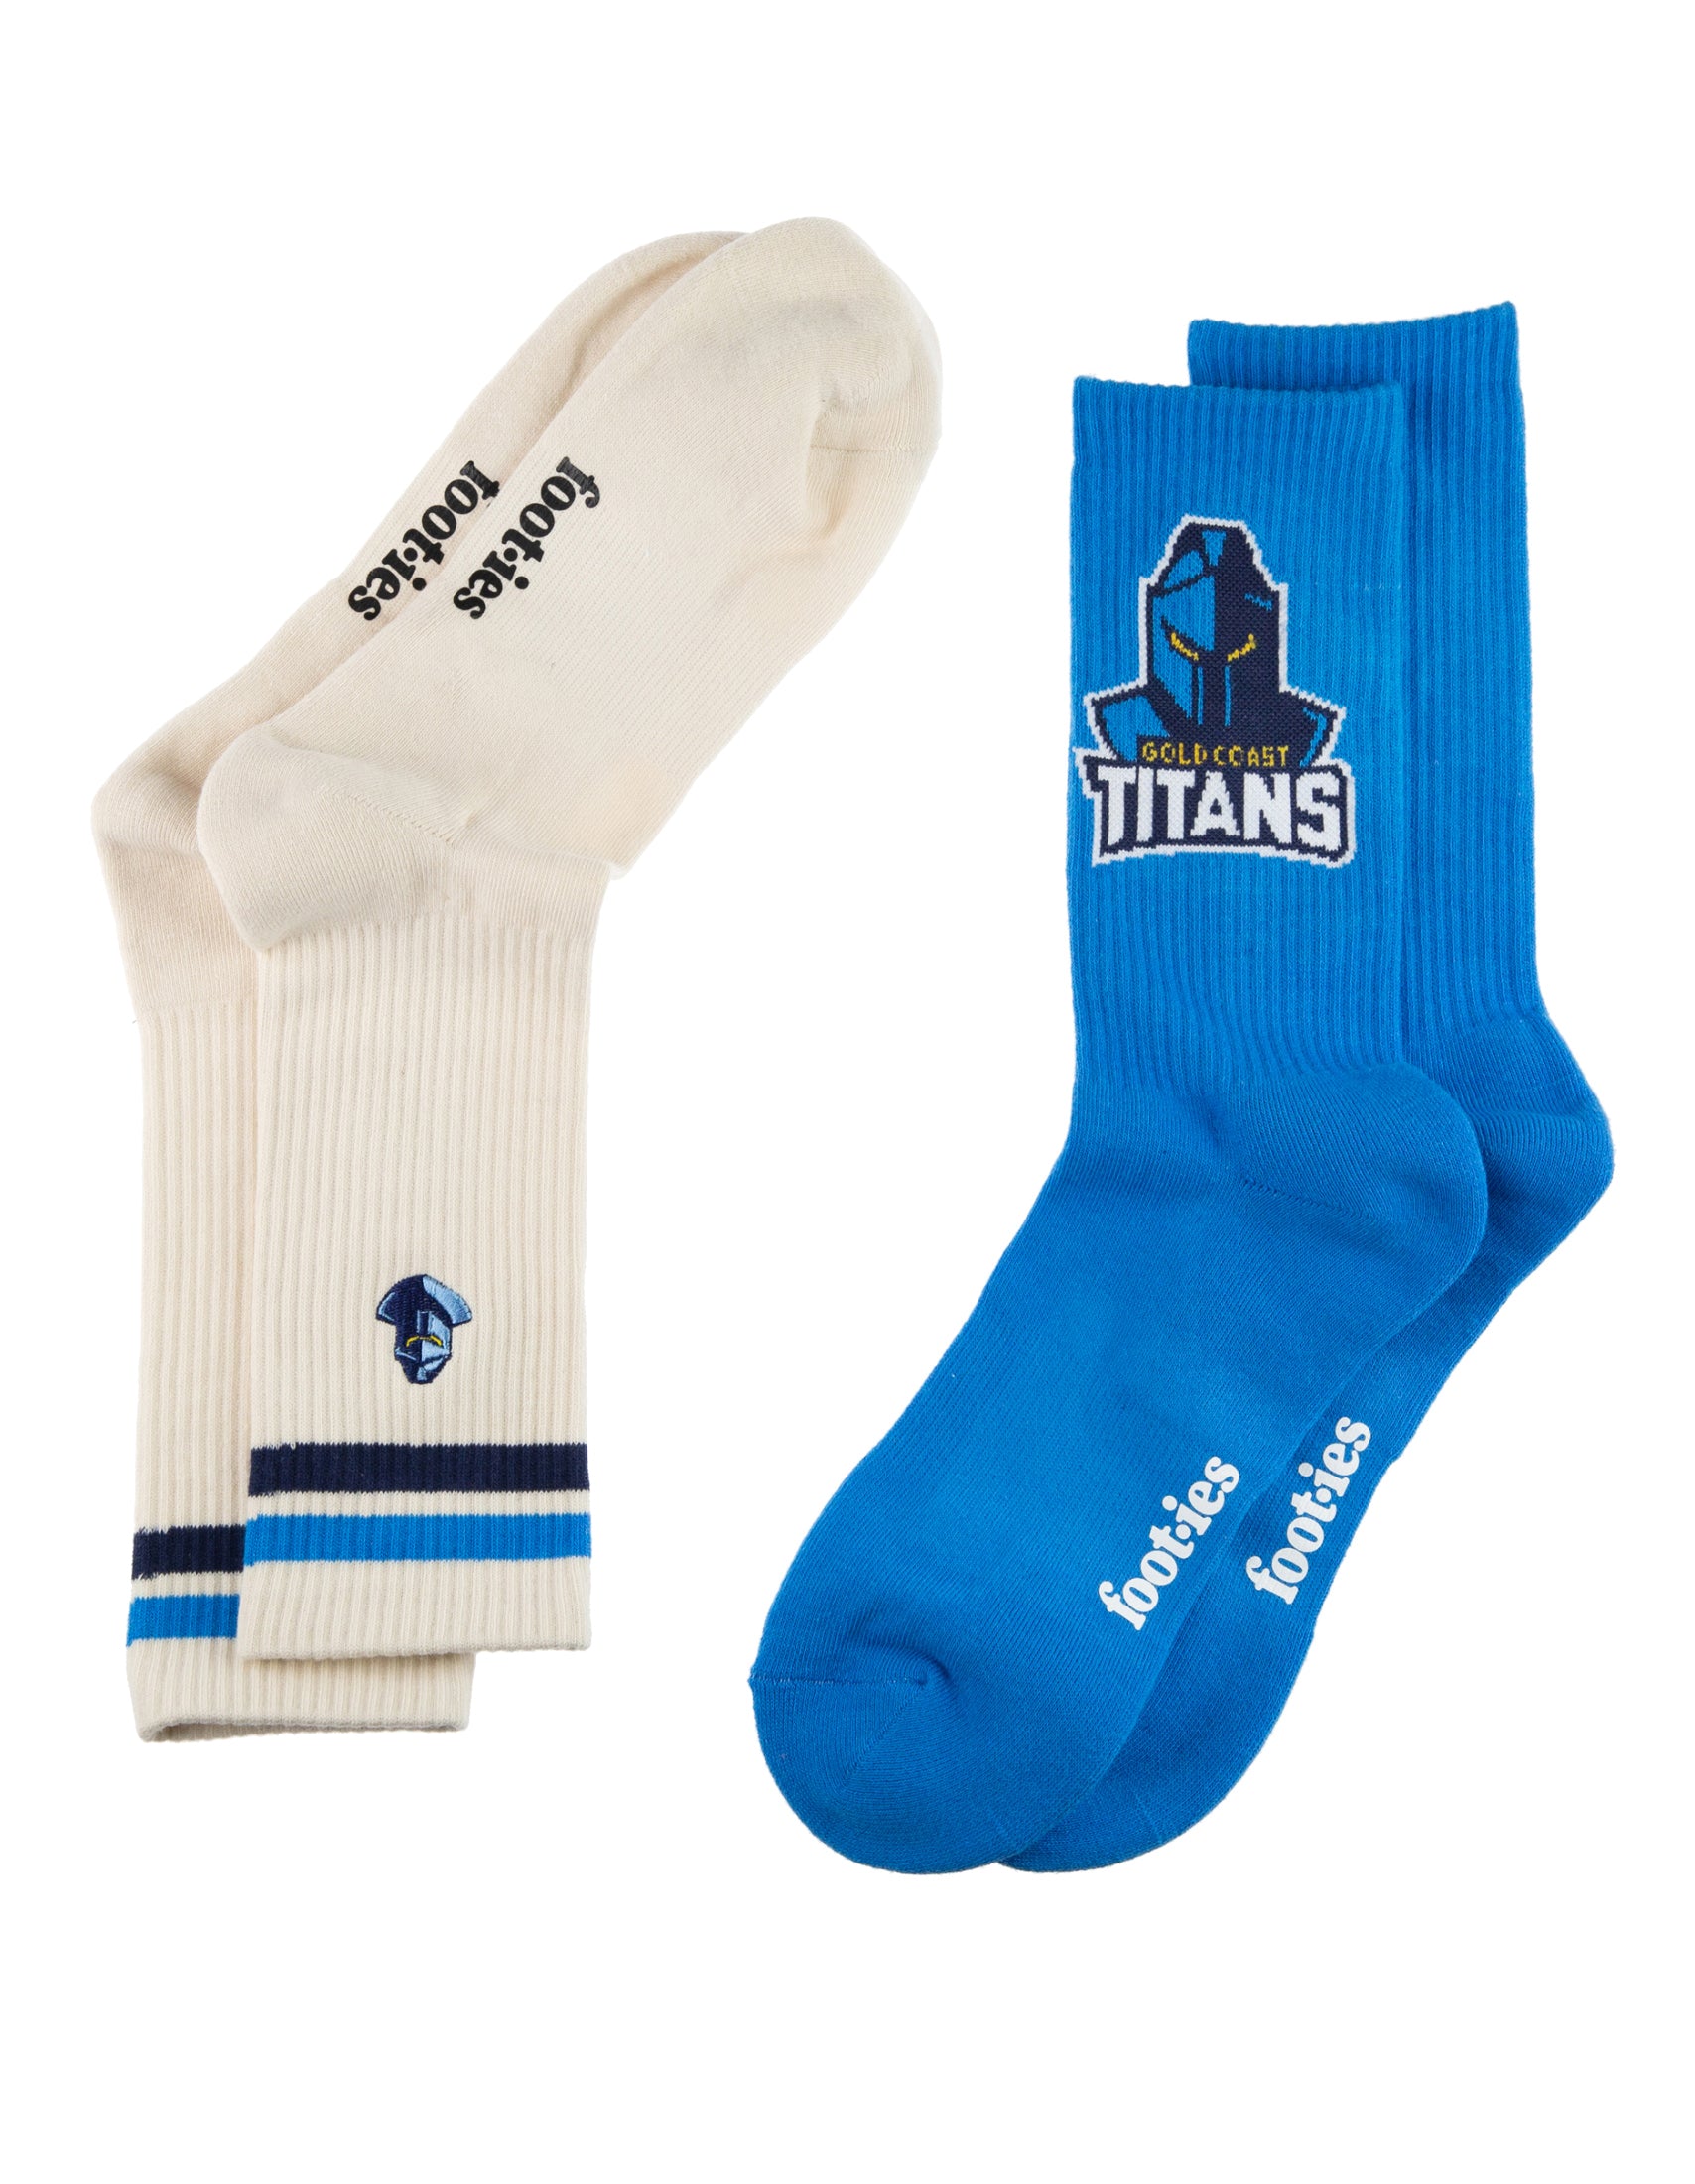 Gold Coast Titans Icons Sneaker Socks 2 Pack